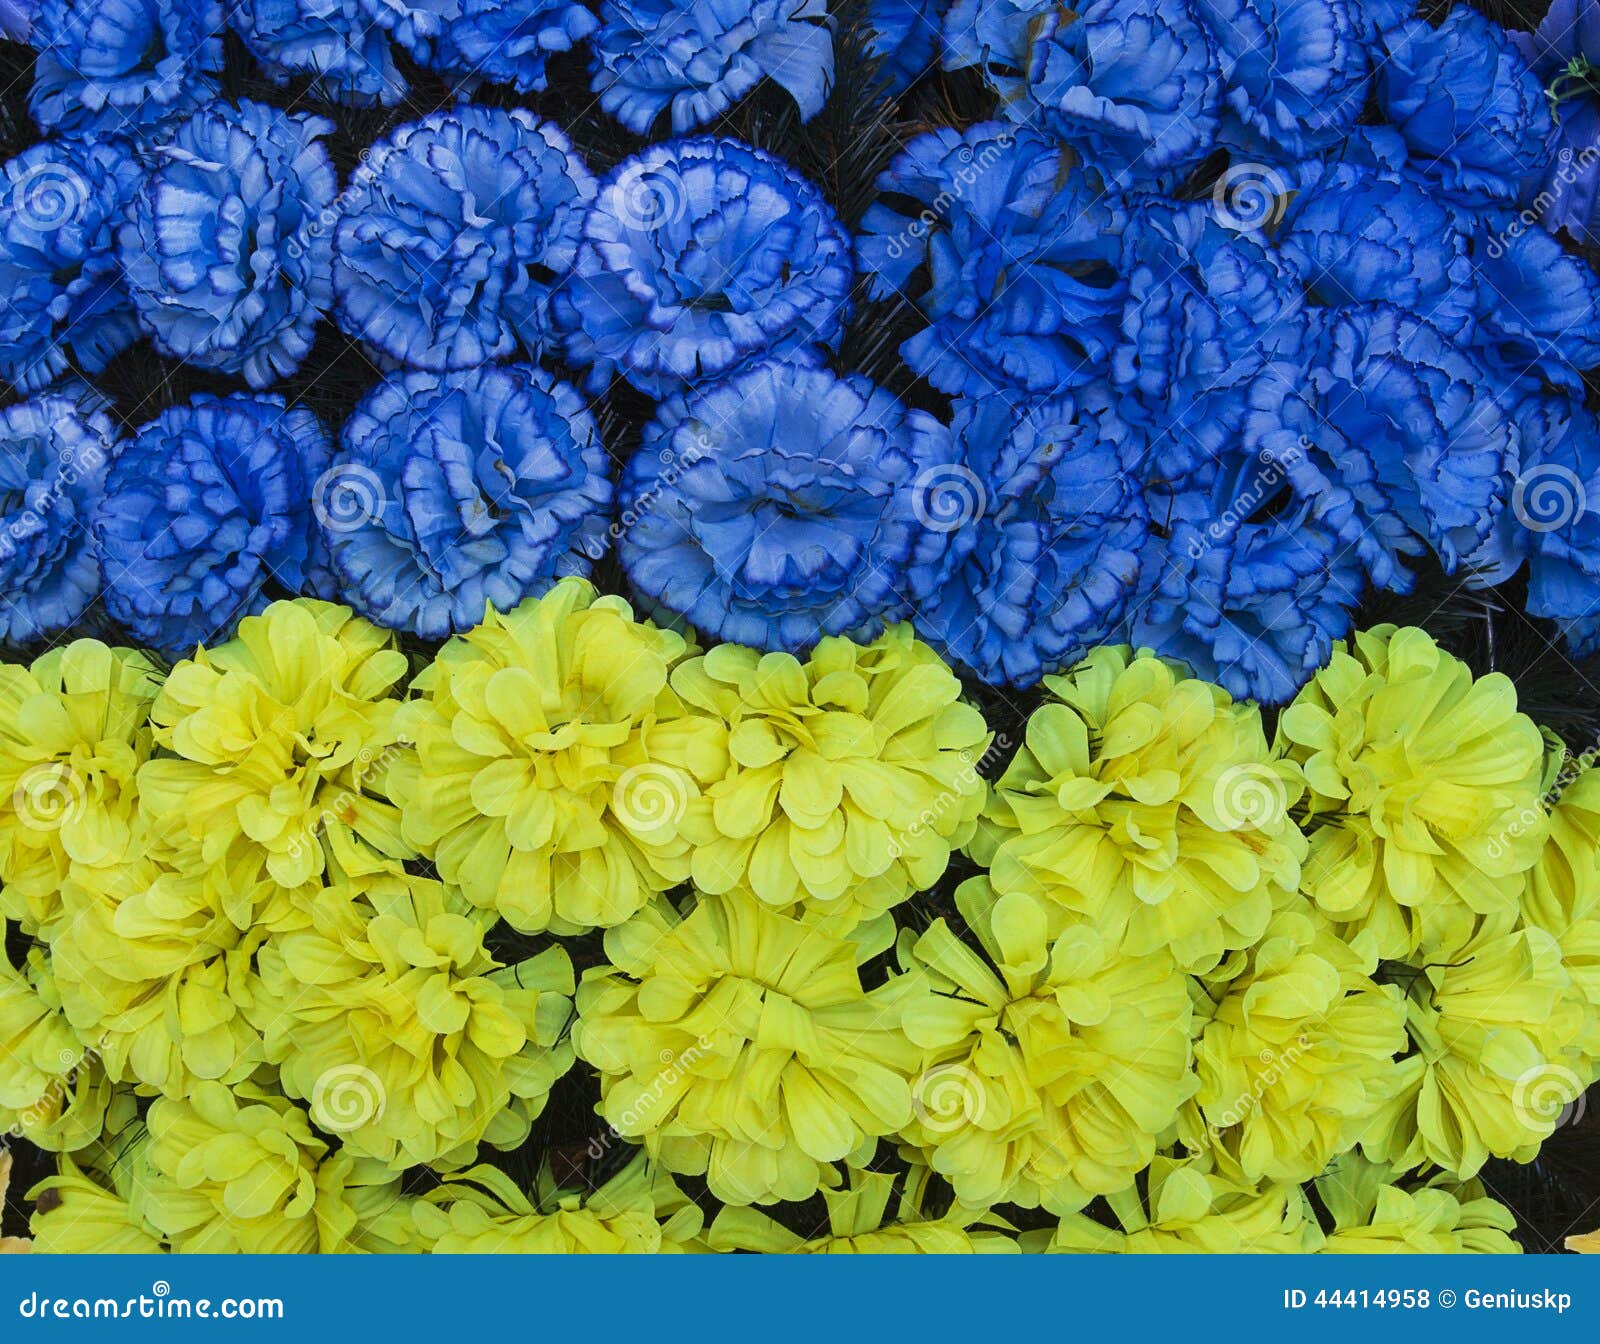 Ukrainian Flag Of Artificial Flowers Stock Photo - Image of artificial ...